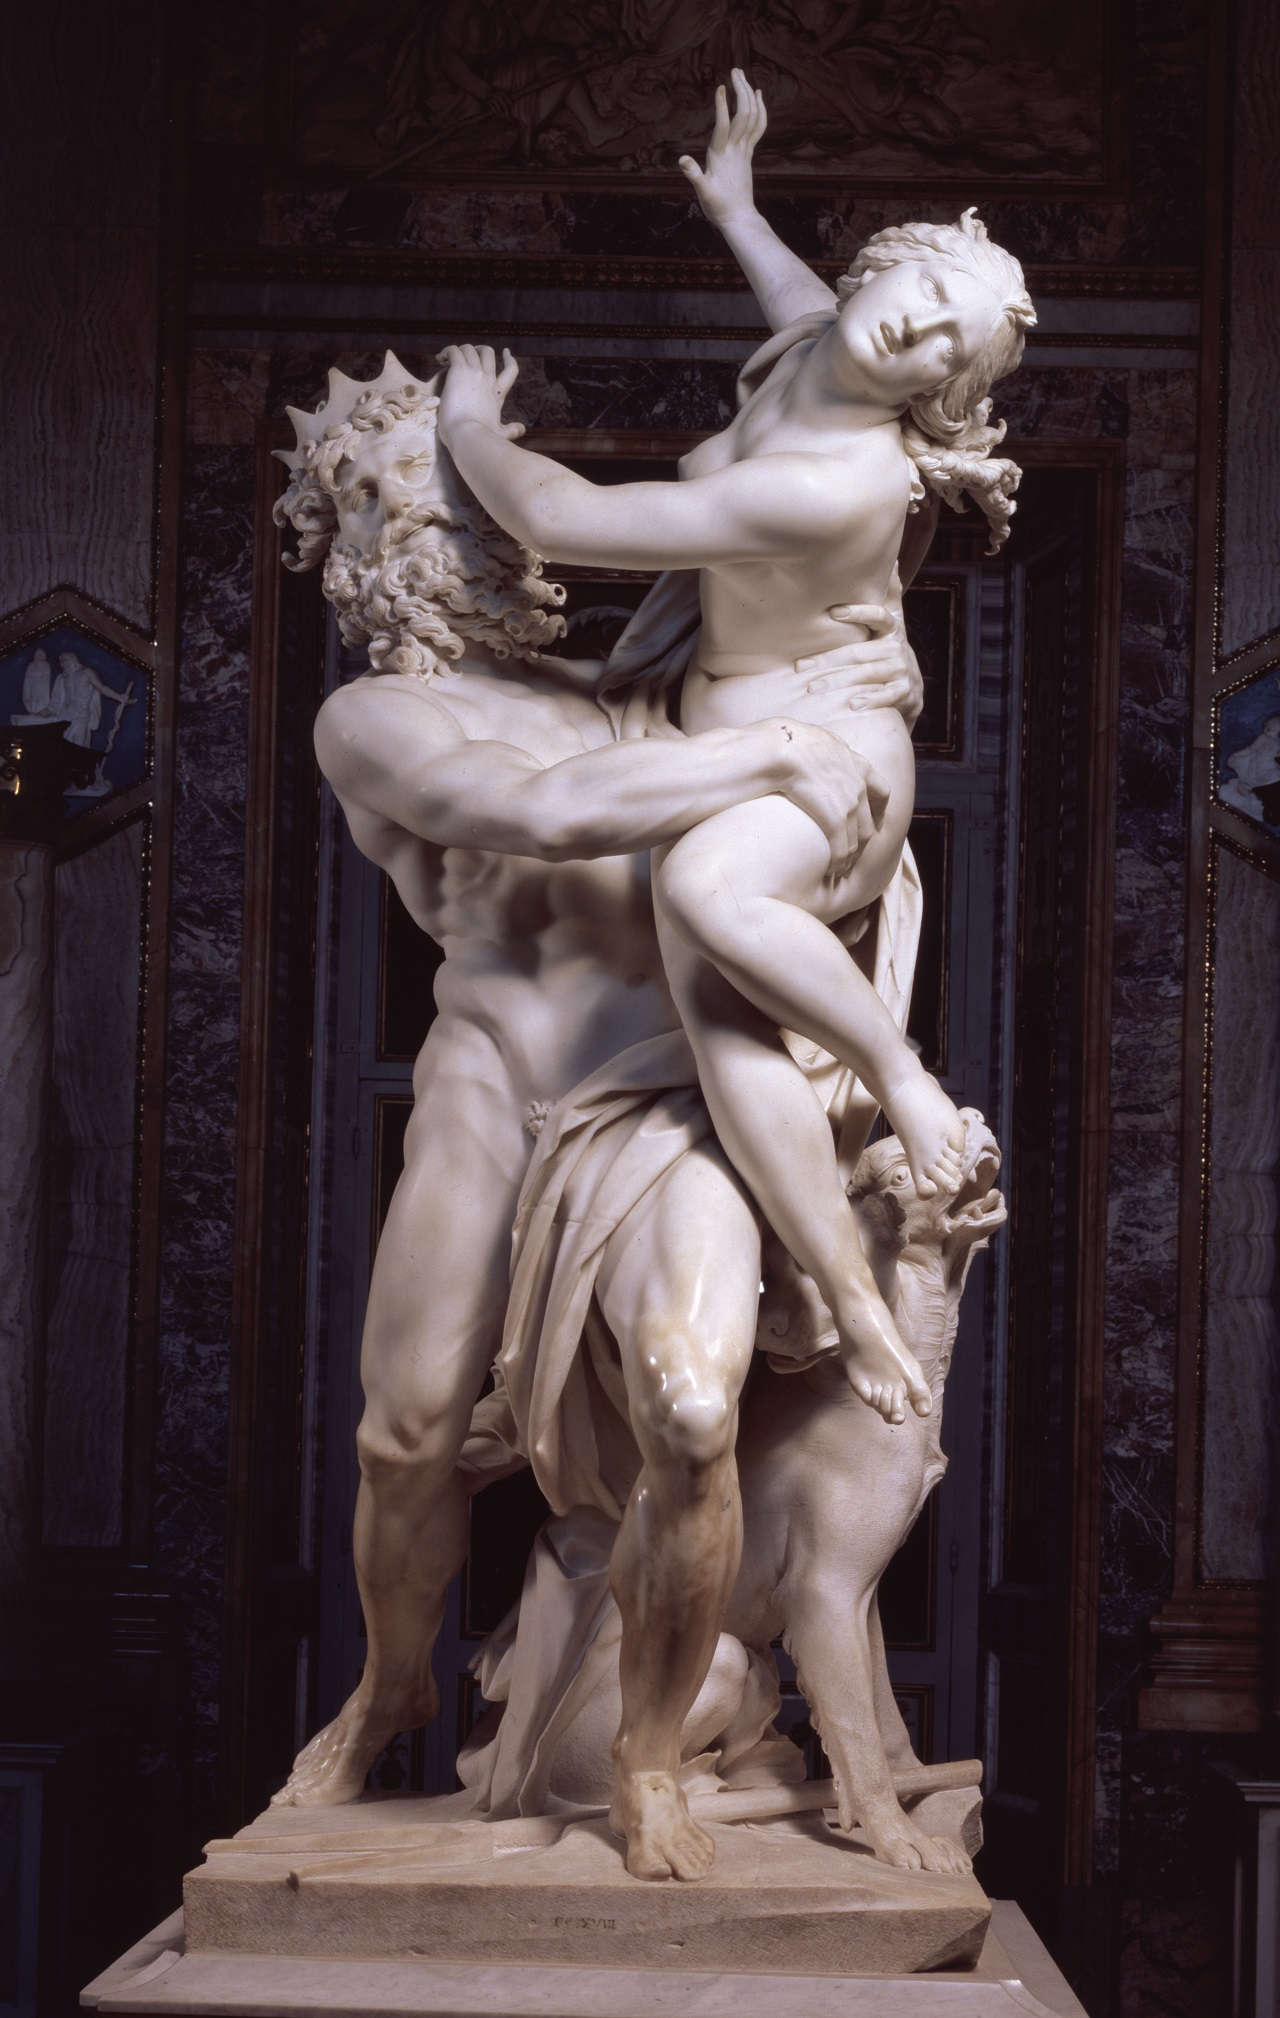 Gian Lorenzo Bernini, Viol de Proserpine (1621-1622 ; marbre, hauteur 255 cm sans la base ; Rome, Galleria Borghese)